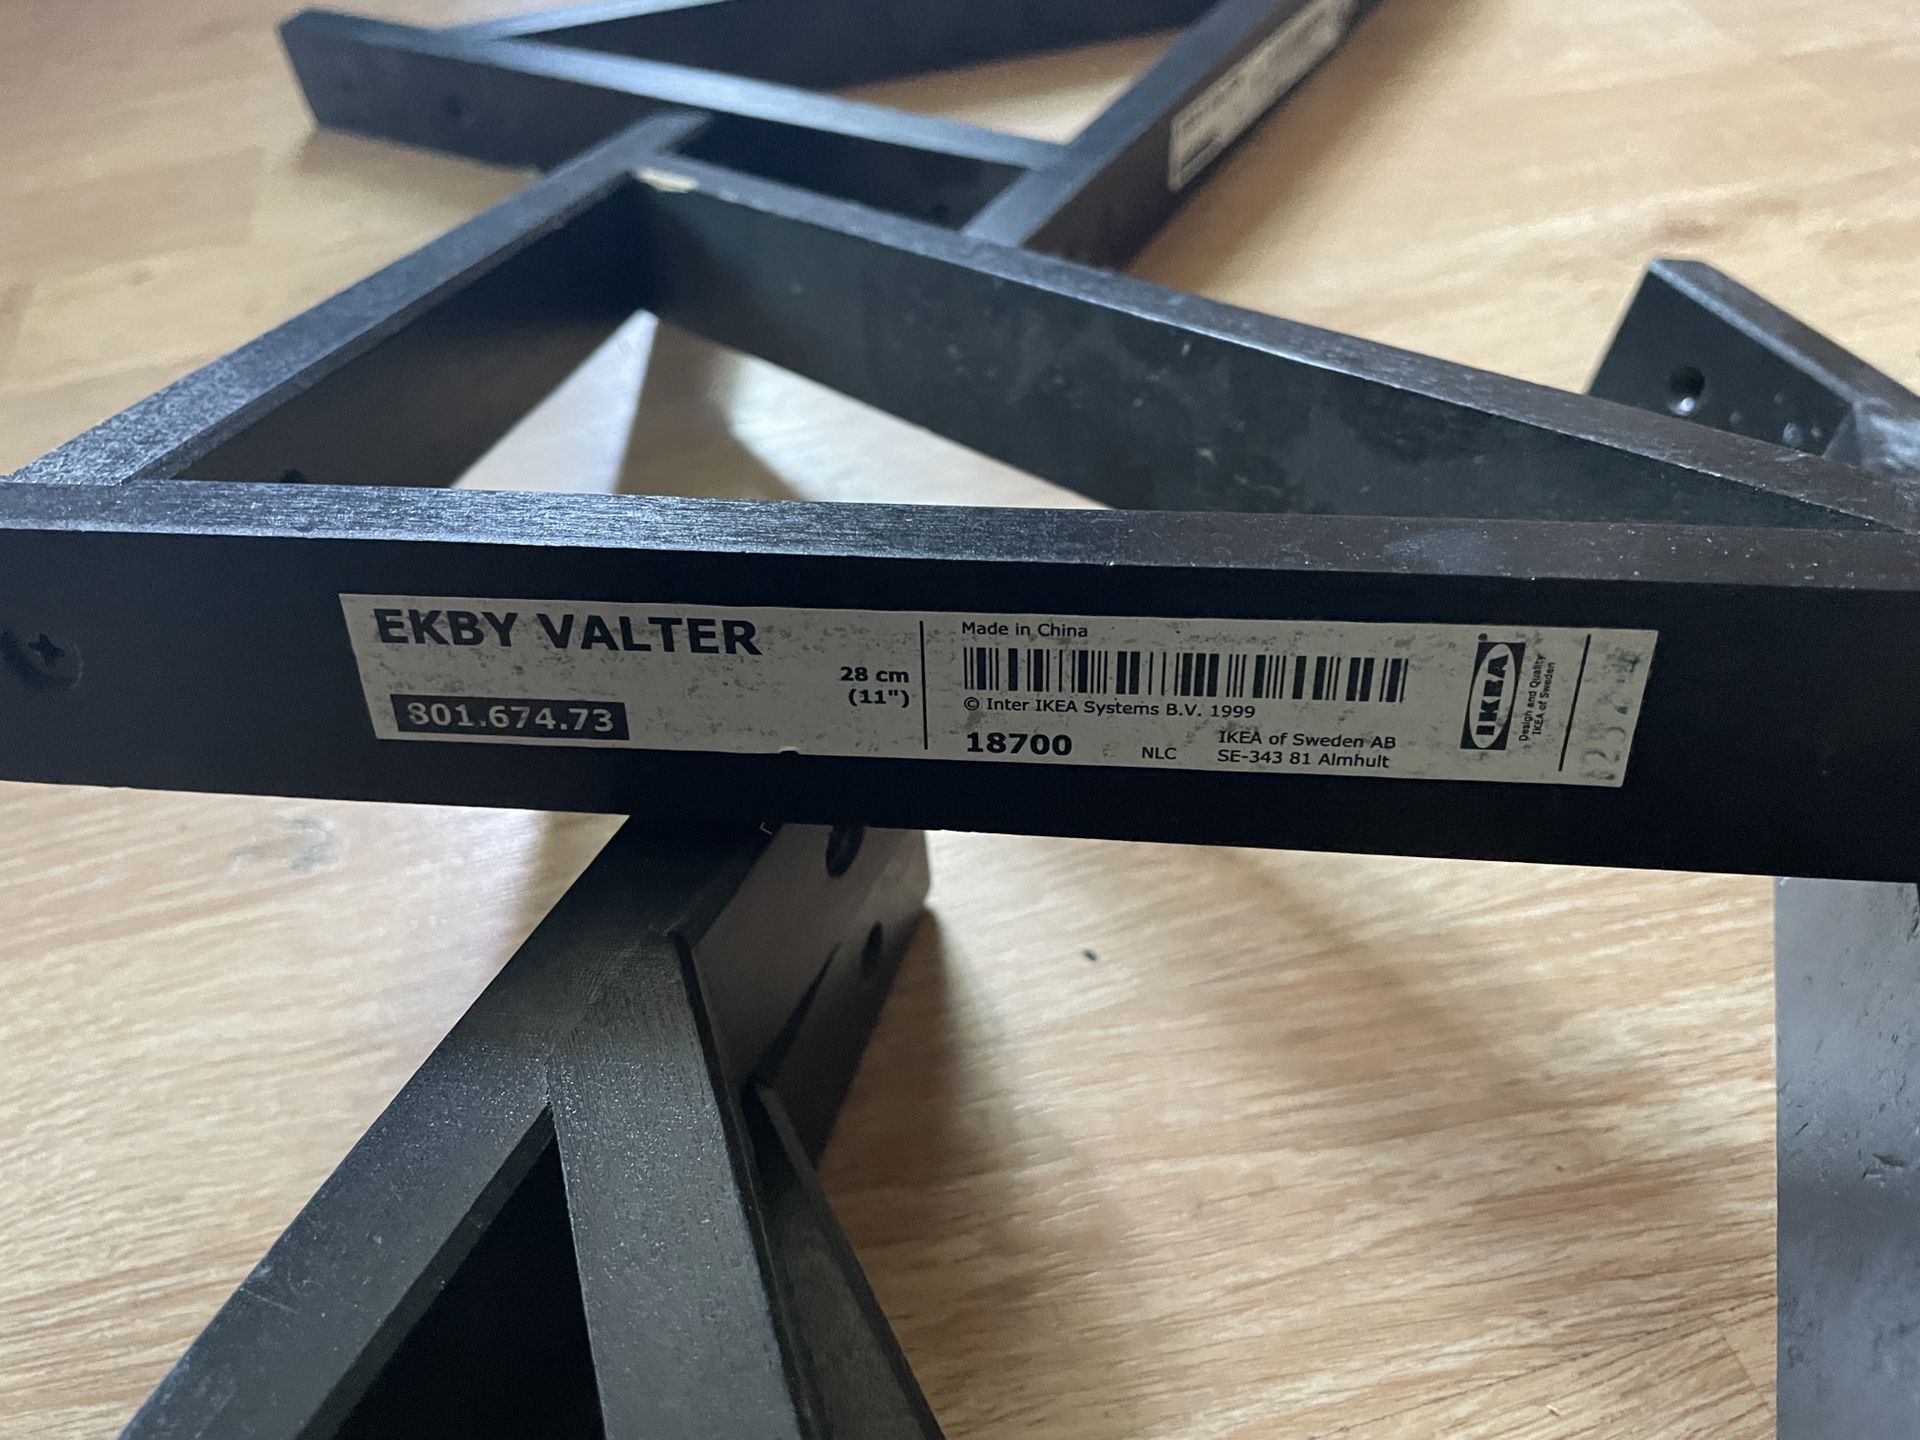 Set of 6 IKEA Shelf Bracket EKBY VALTER 7 1/8” ( 18 cm ) Black 001.674.72,